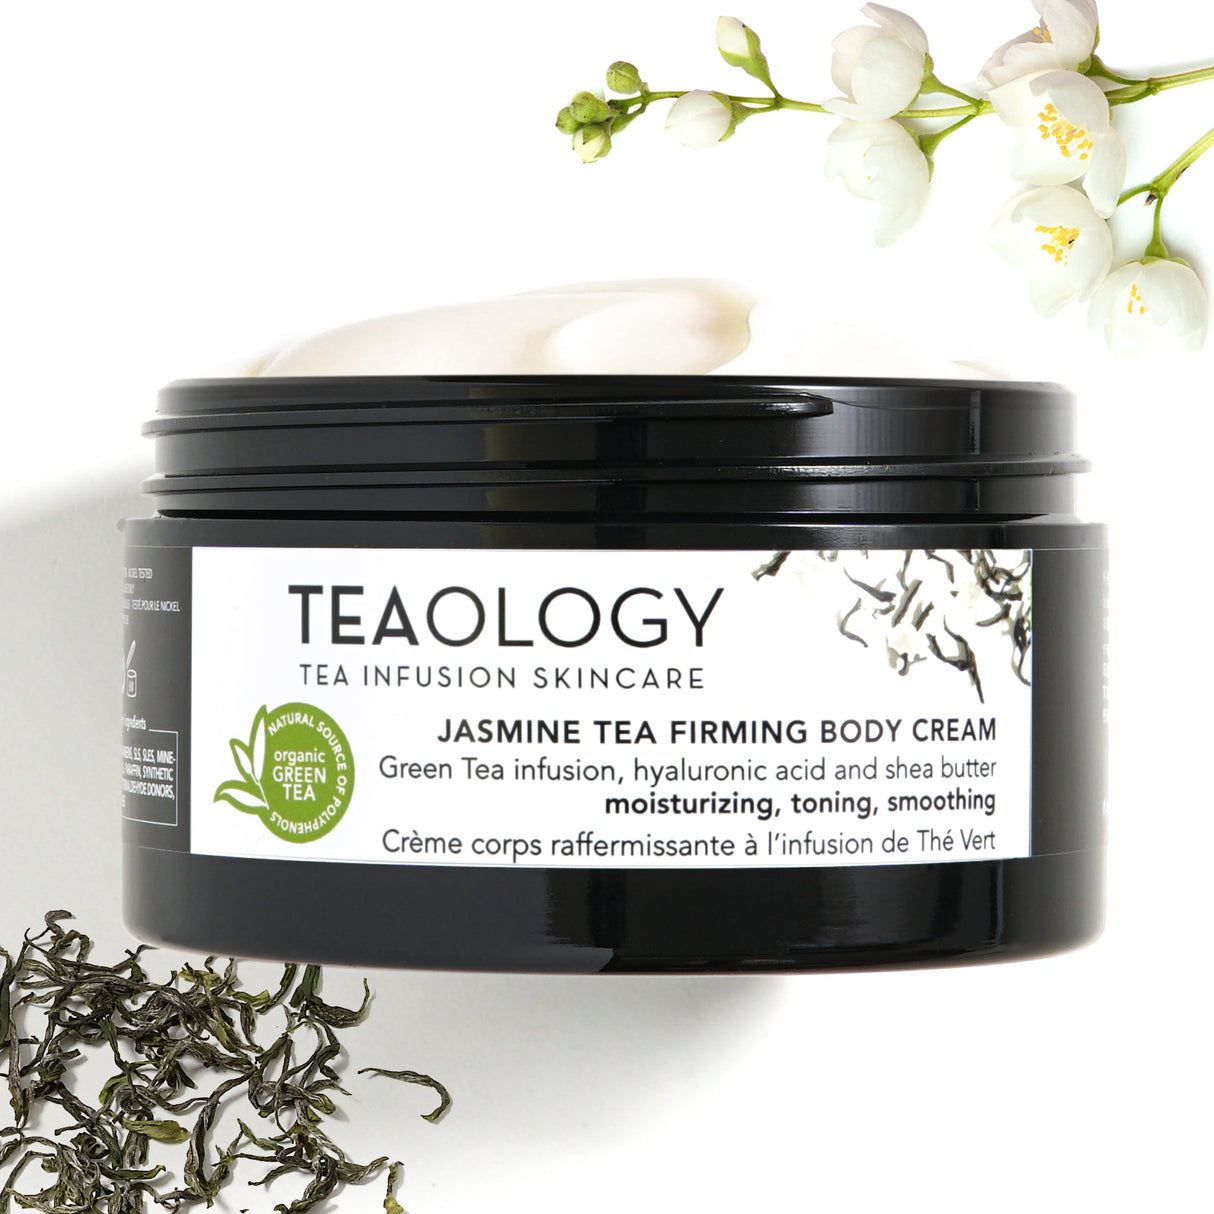 Jasmine Tea Firming Body Cream-Teaology